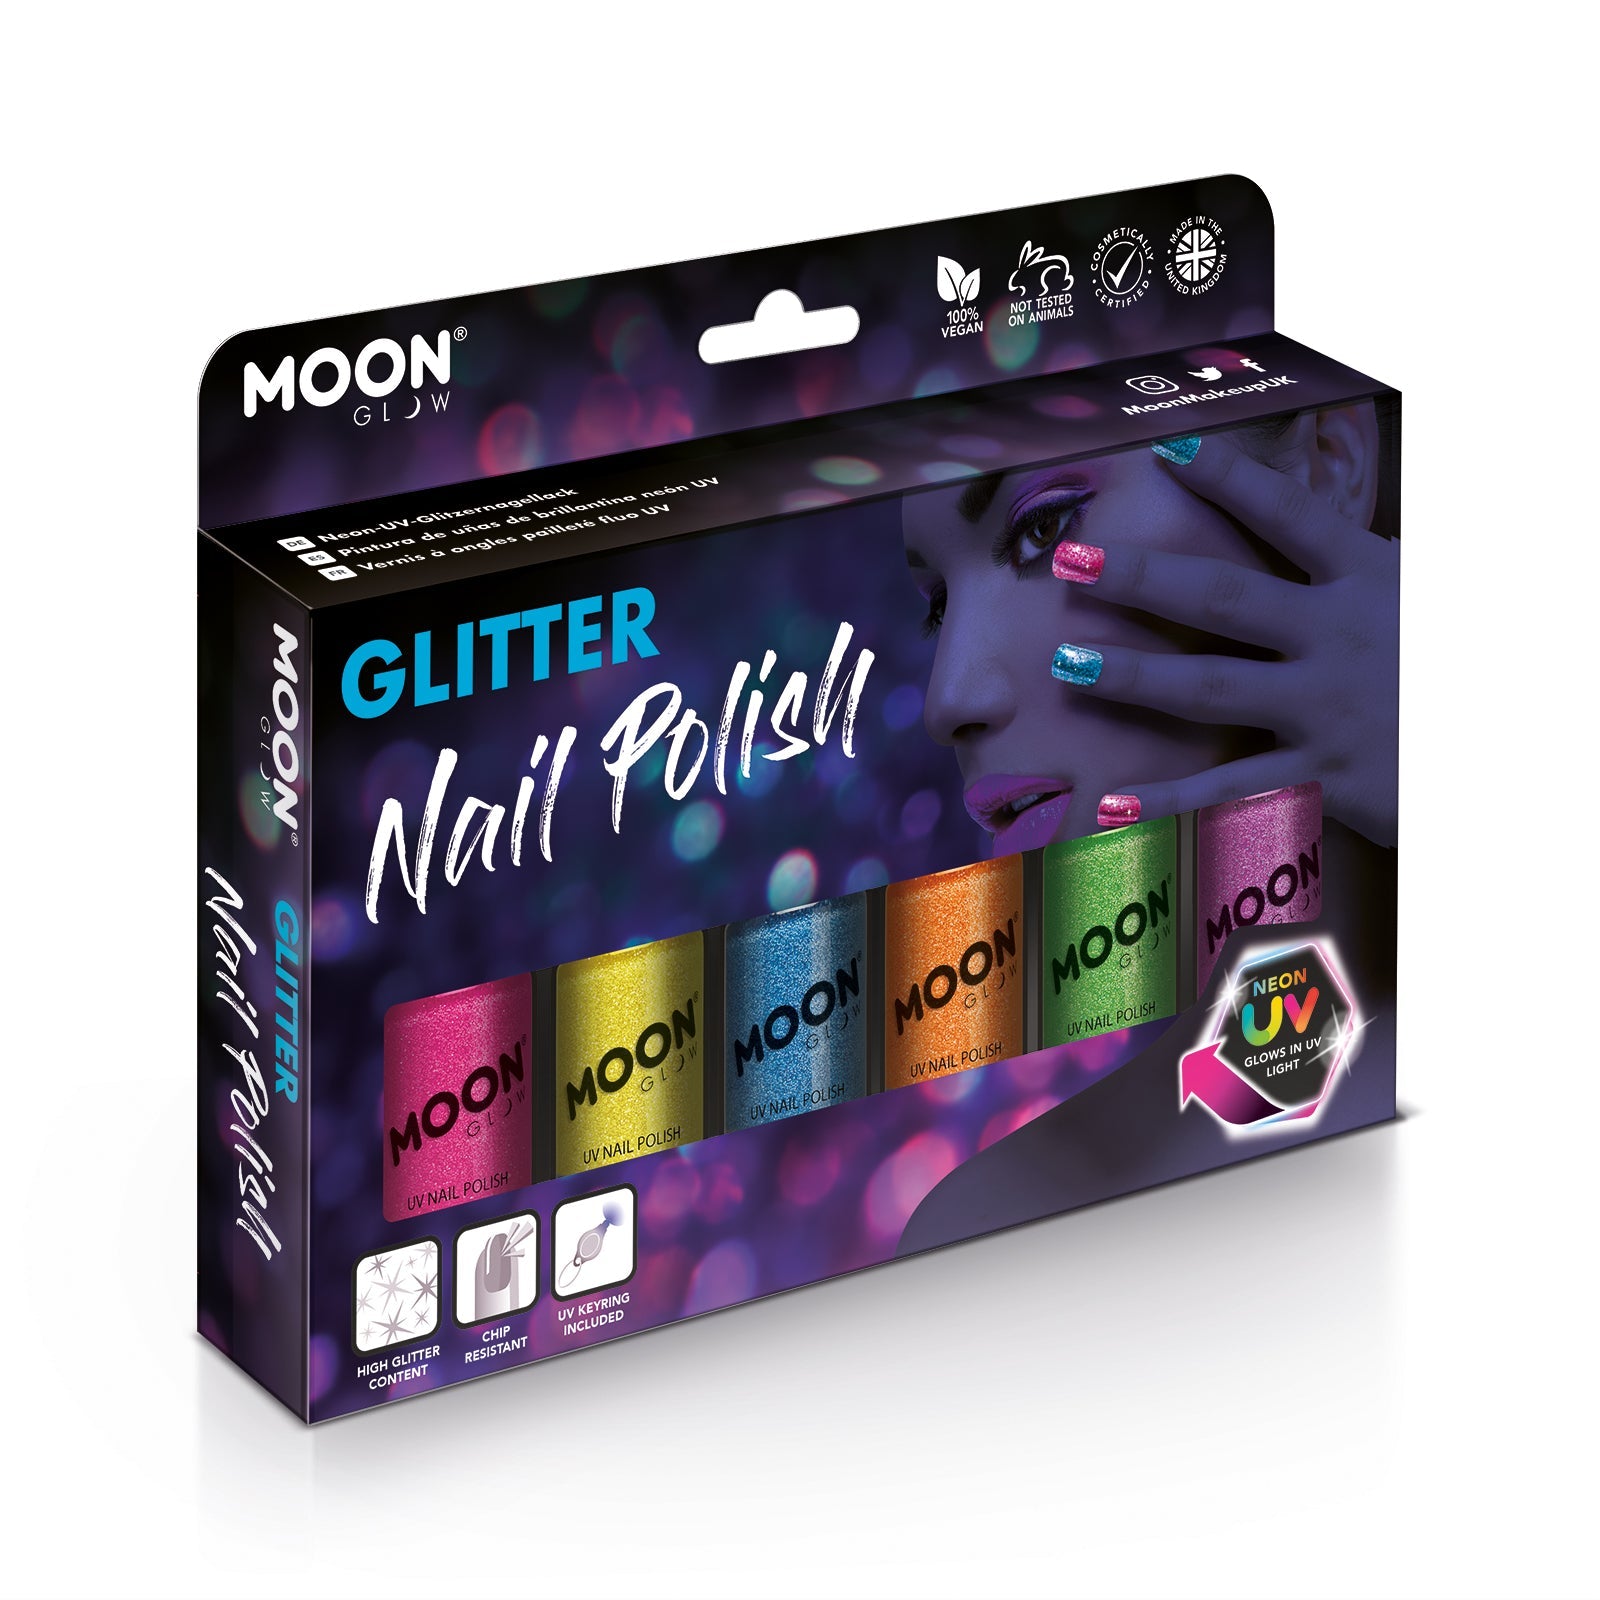 UV Glitter Nail Polish Boxset - 6 nail polish bottles, UV light. Cosmetically certified, FDA & Health Canada compliant, cruelty free and vegan.